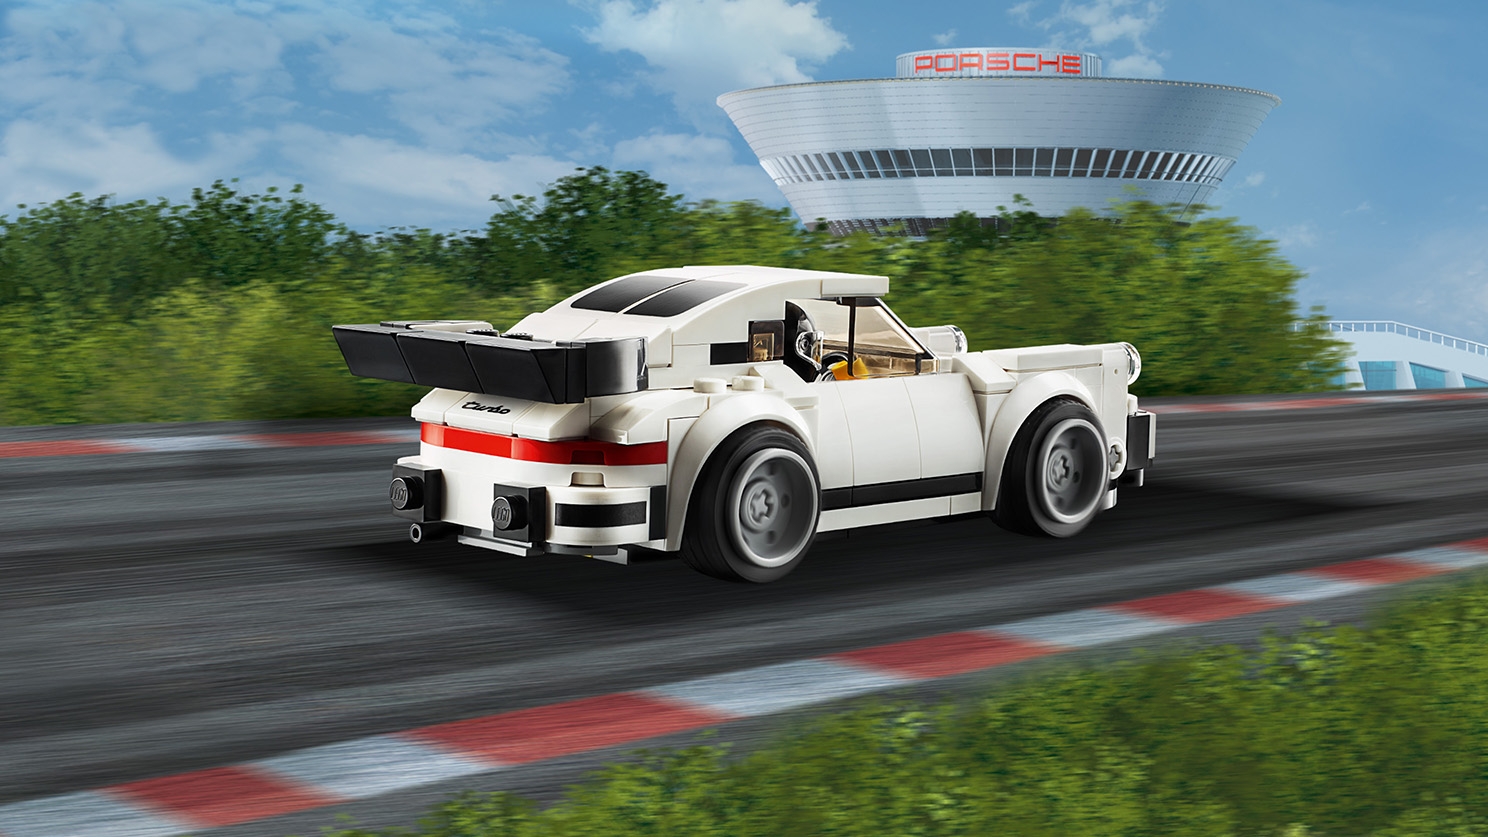  LEGO 75895 Speed Champions Porsche 911 Turbo 3.0 Toy Car, Forza  Horizon 4 Expansion Pack Model